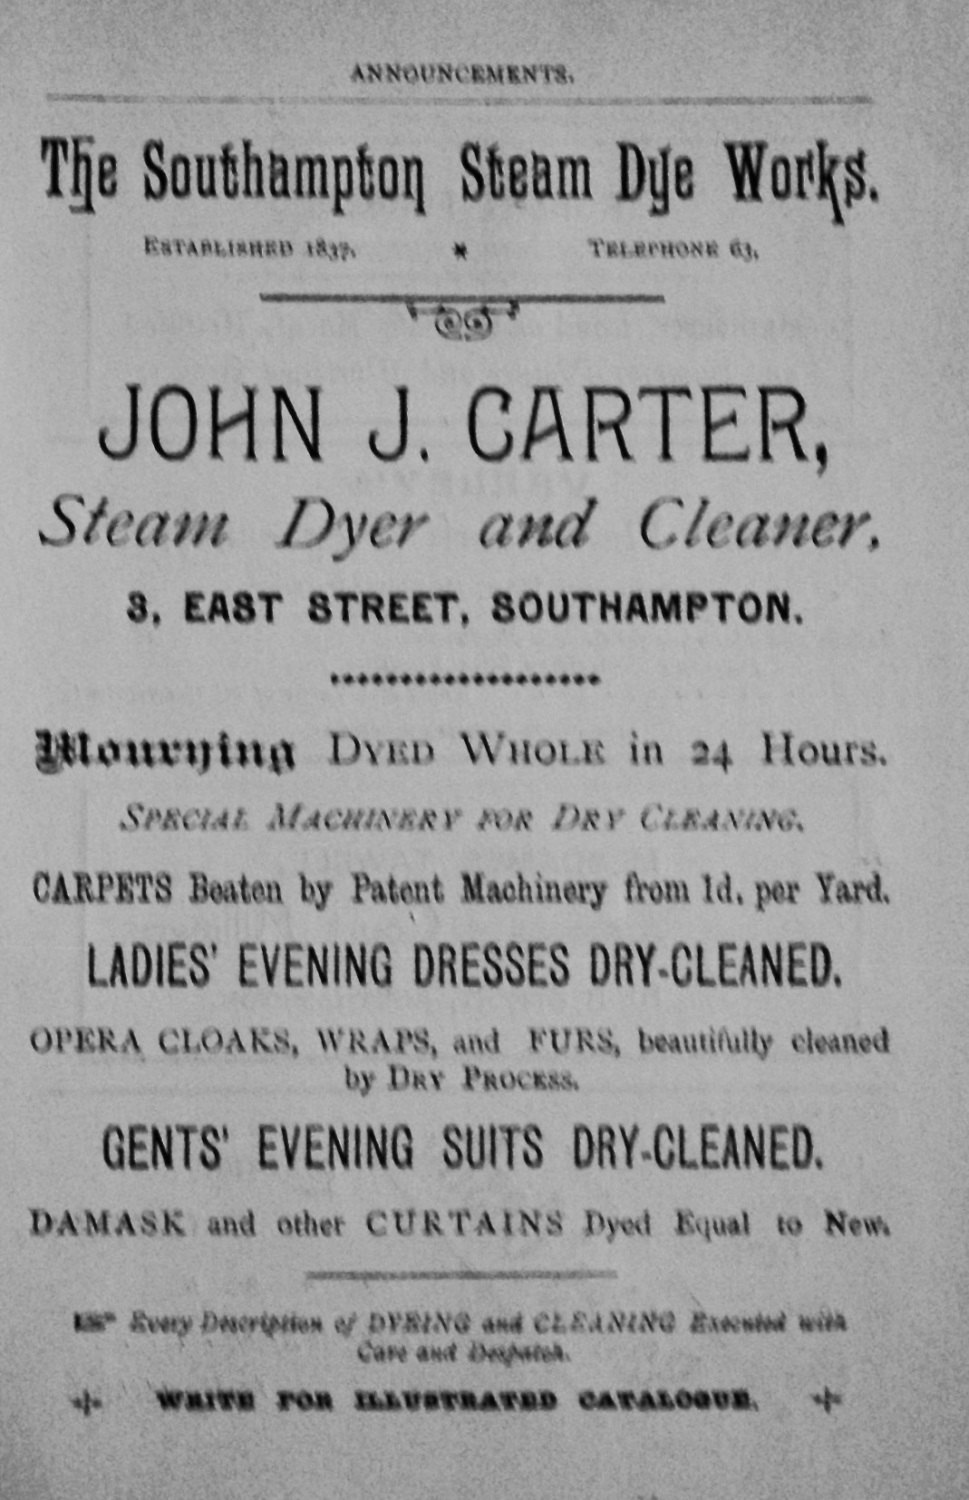 John J. Carter.  Steam Dyer and Cleaner, 3, East Street, Southampton.  1897